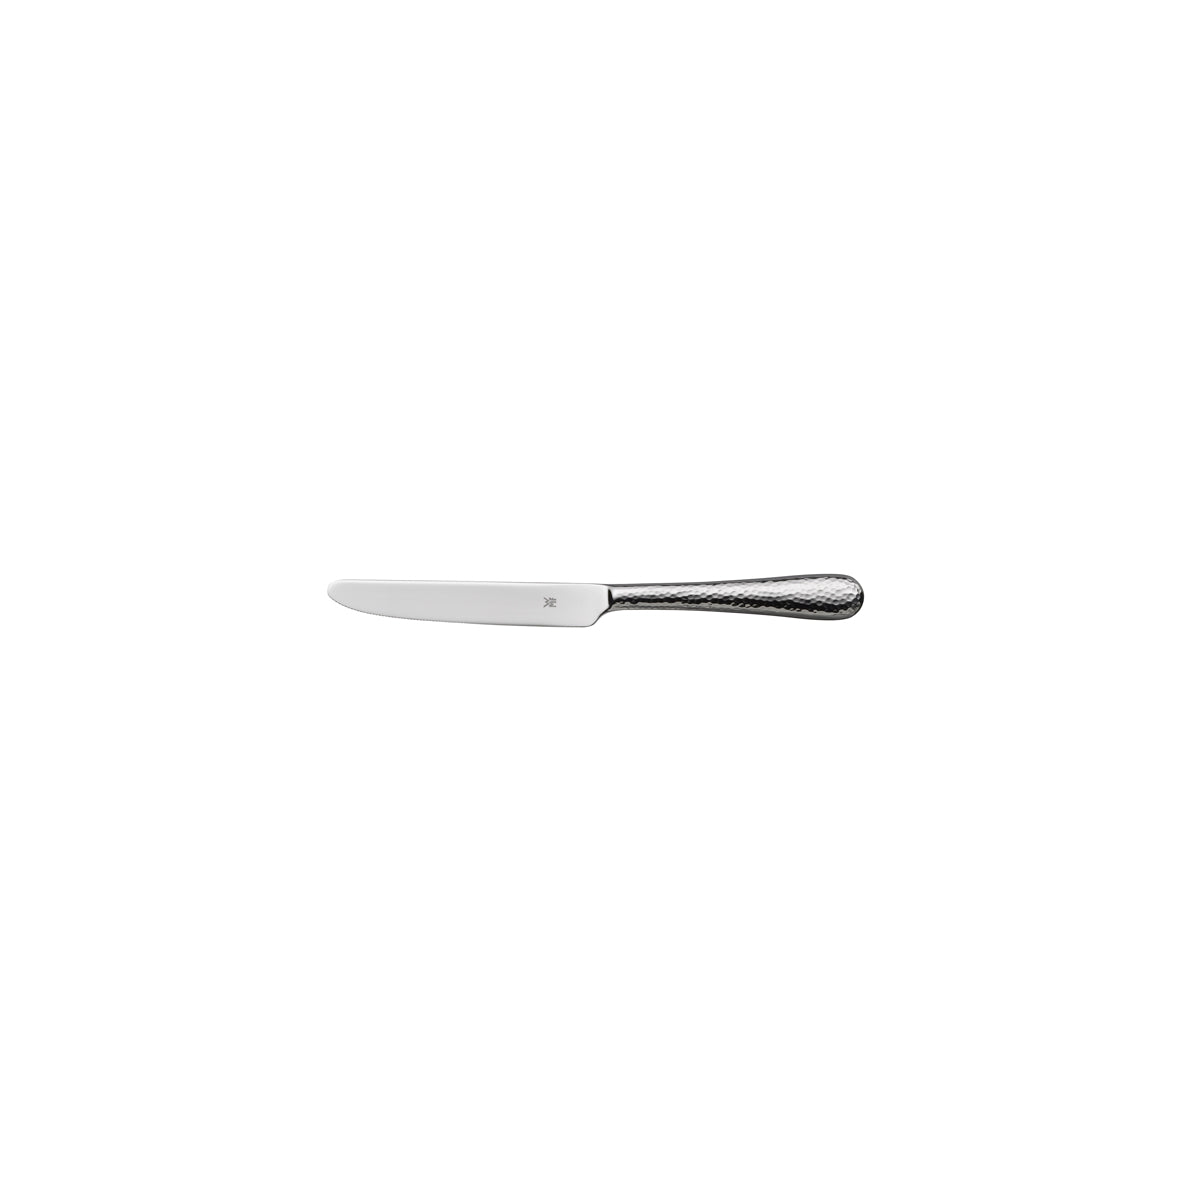 54.5086.6049 WMF Sitello Fruit Knife Stainless Steel Tomkin Australia Hospitality Supplies